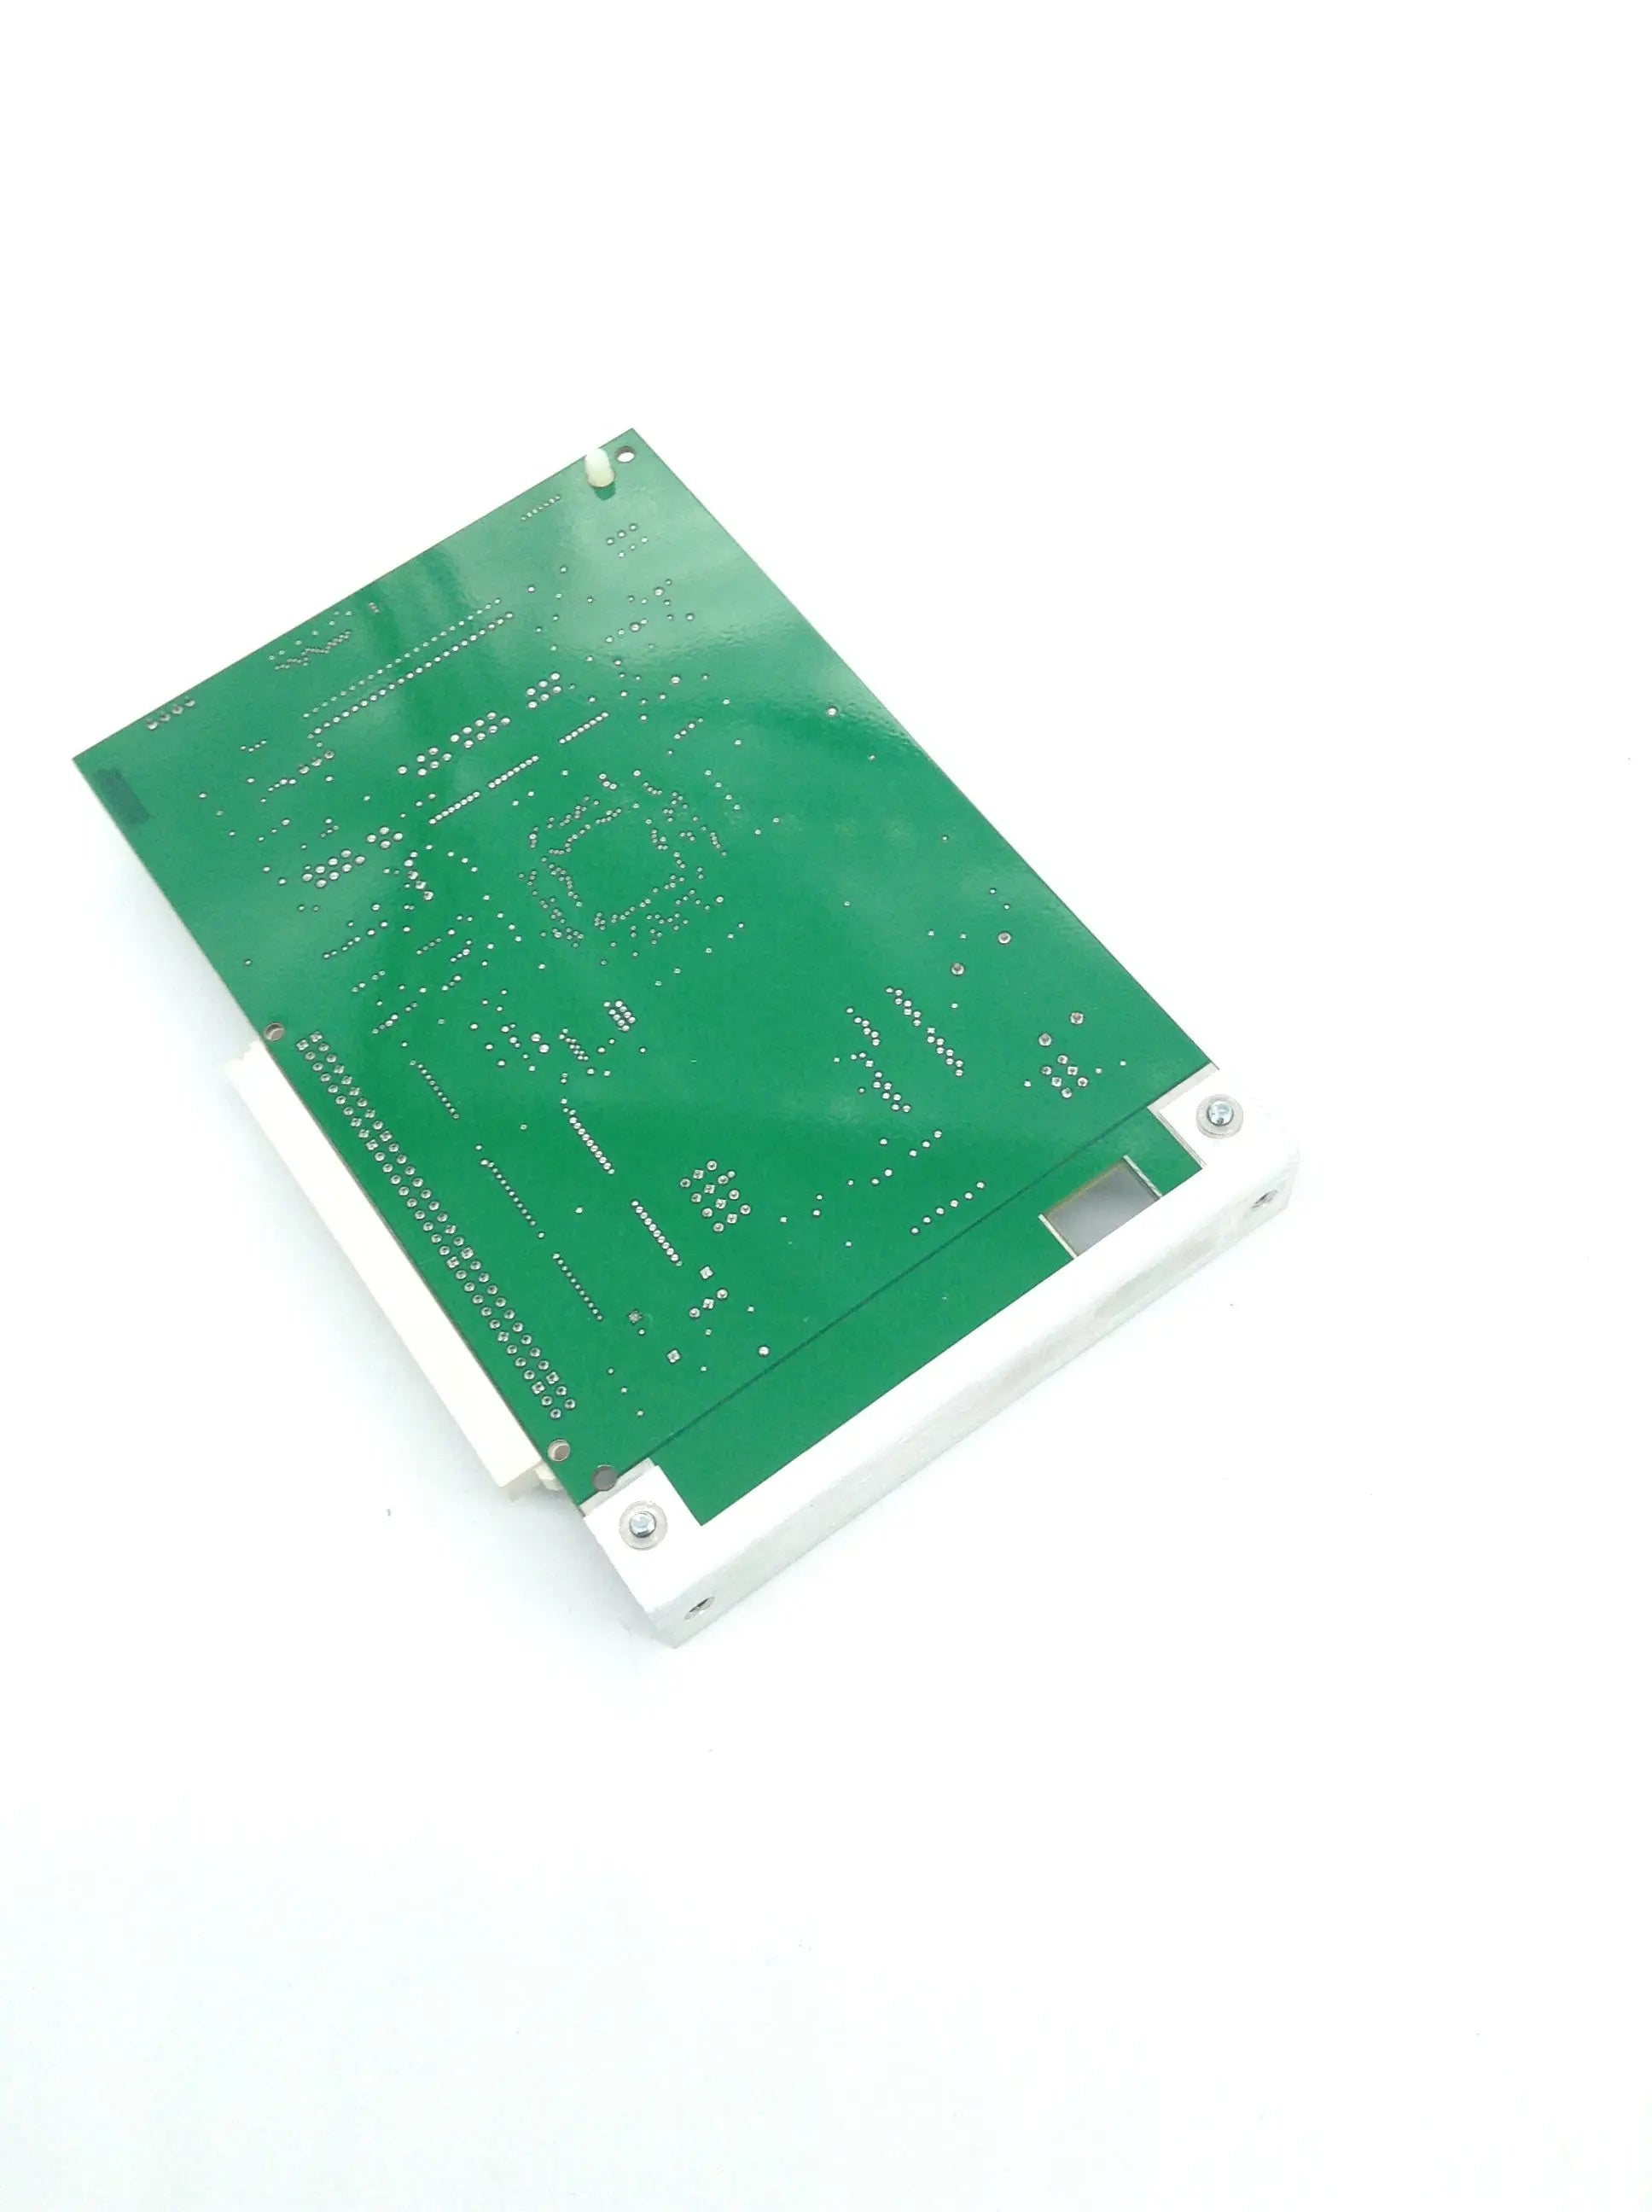 Load image into Gallery viewer, A Biomedical Service Perkin Elmer N6709004, TMX Digital LCD InterFace Circuit Board 